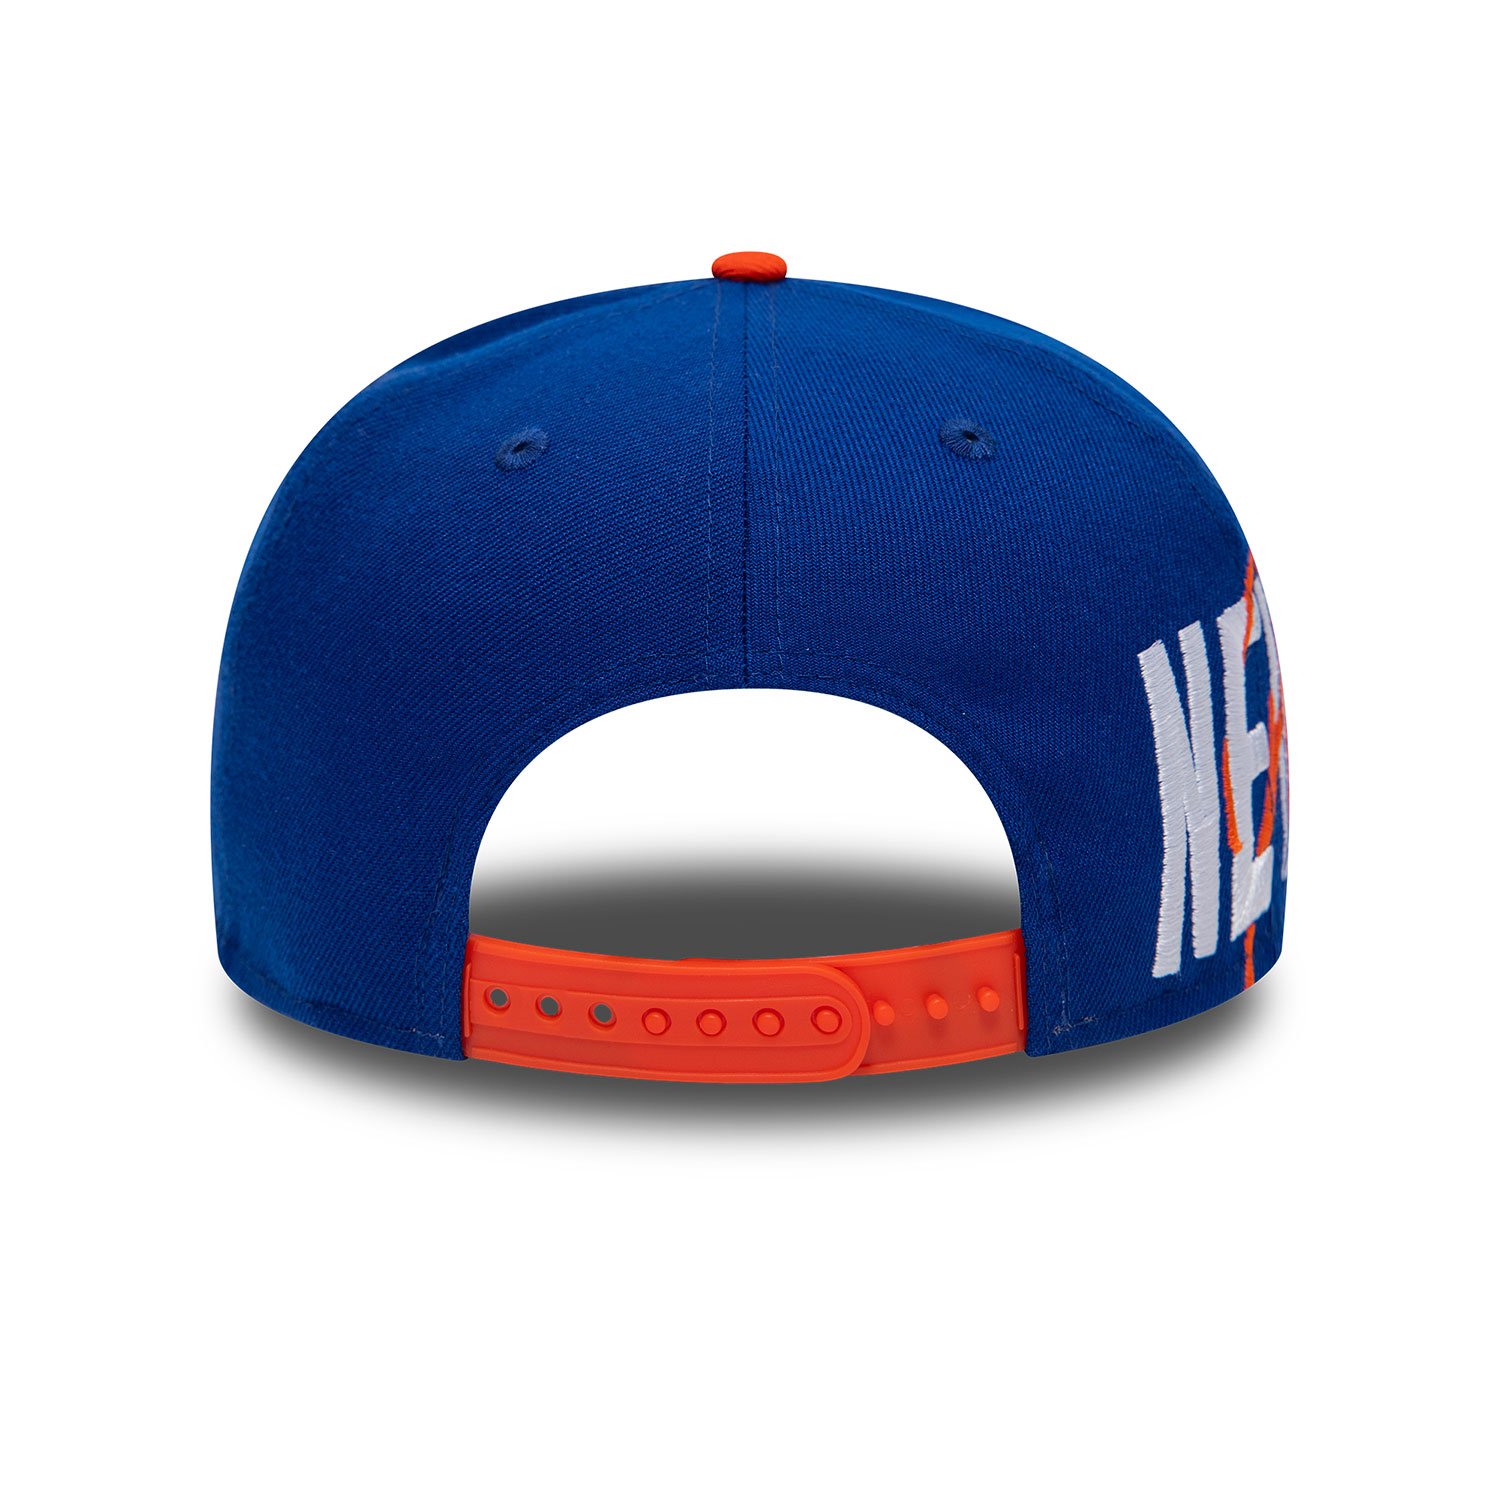 New York Mets Side Font Blue 9FIFTY Snapback Cap